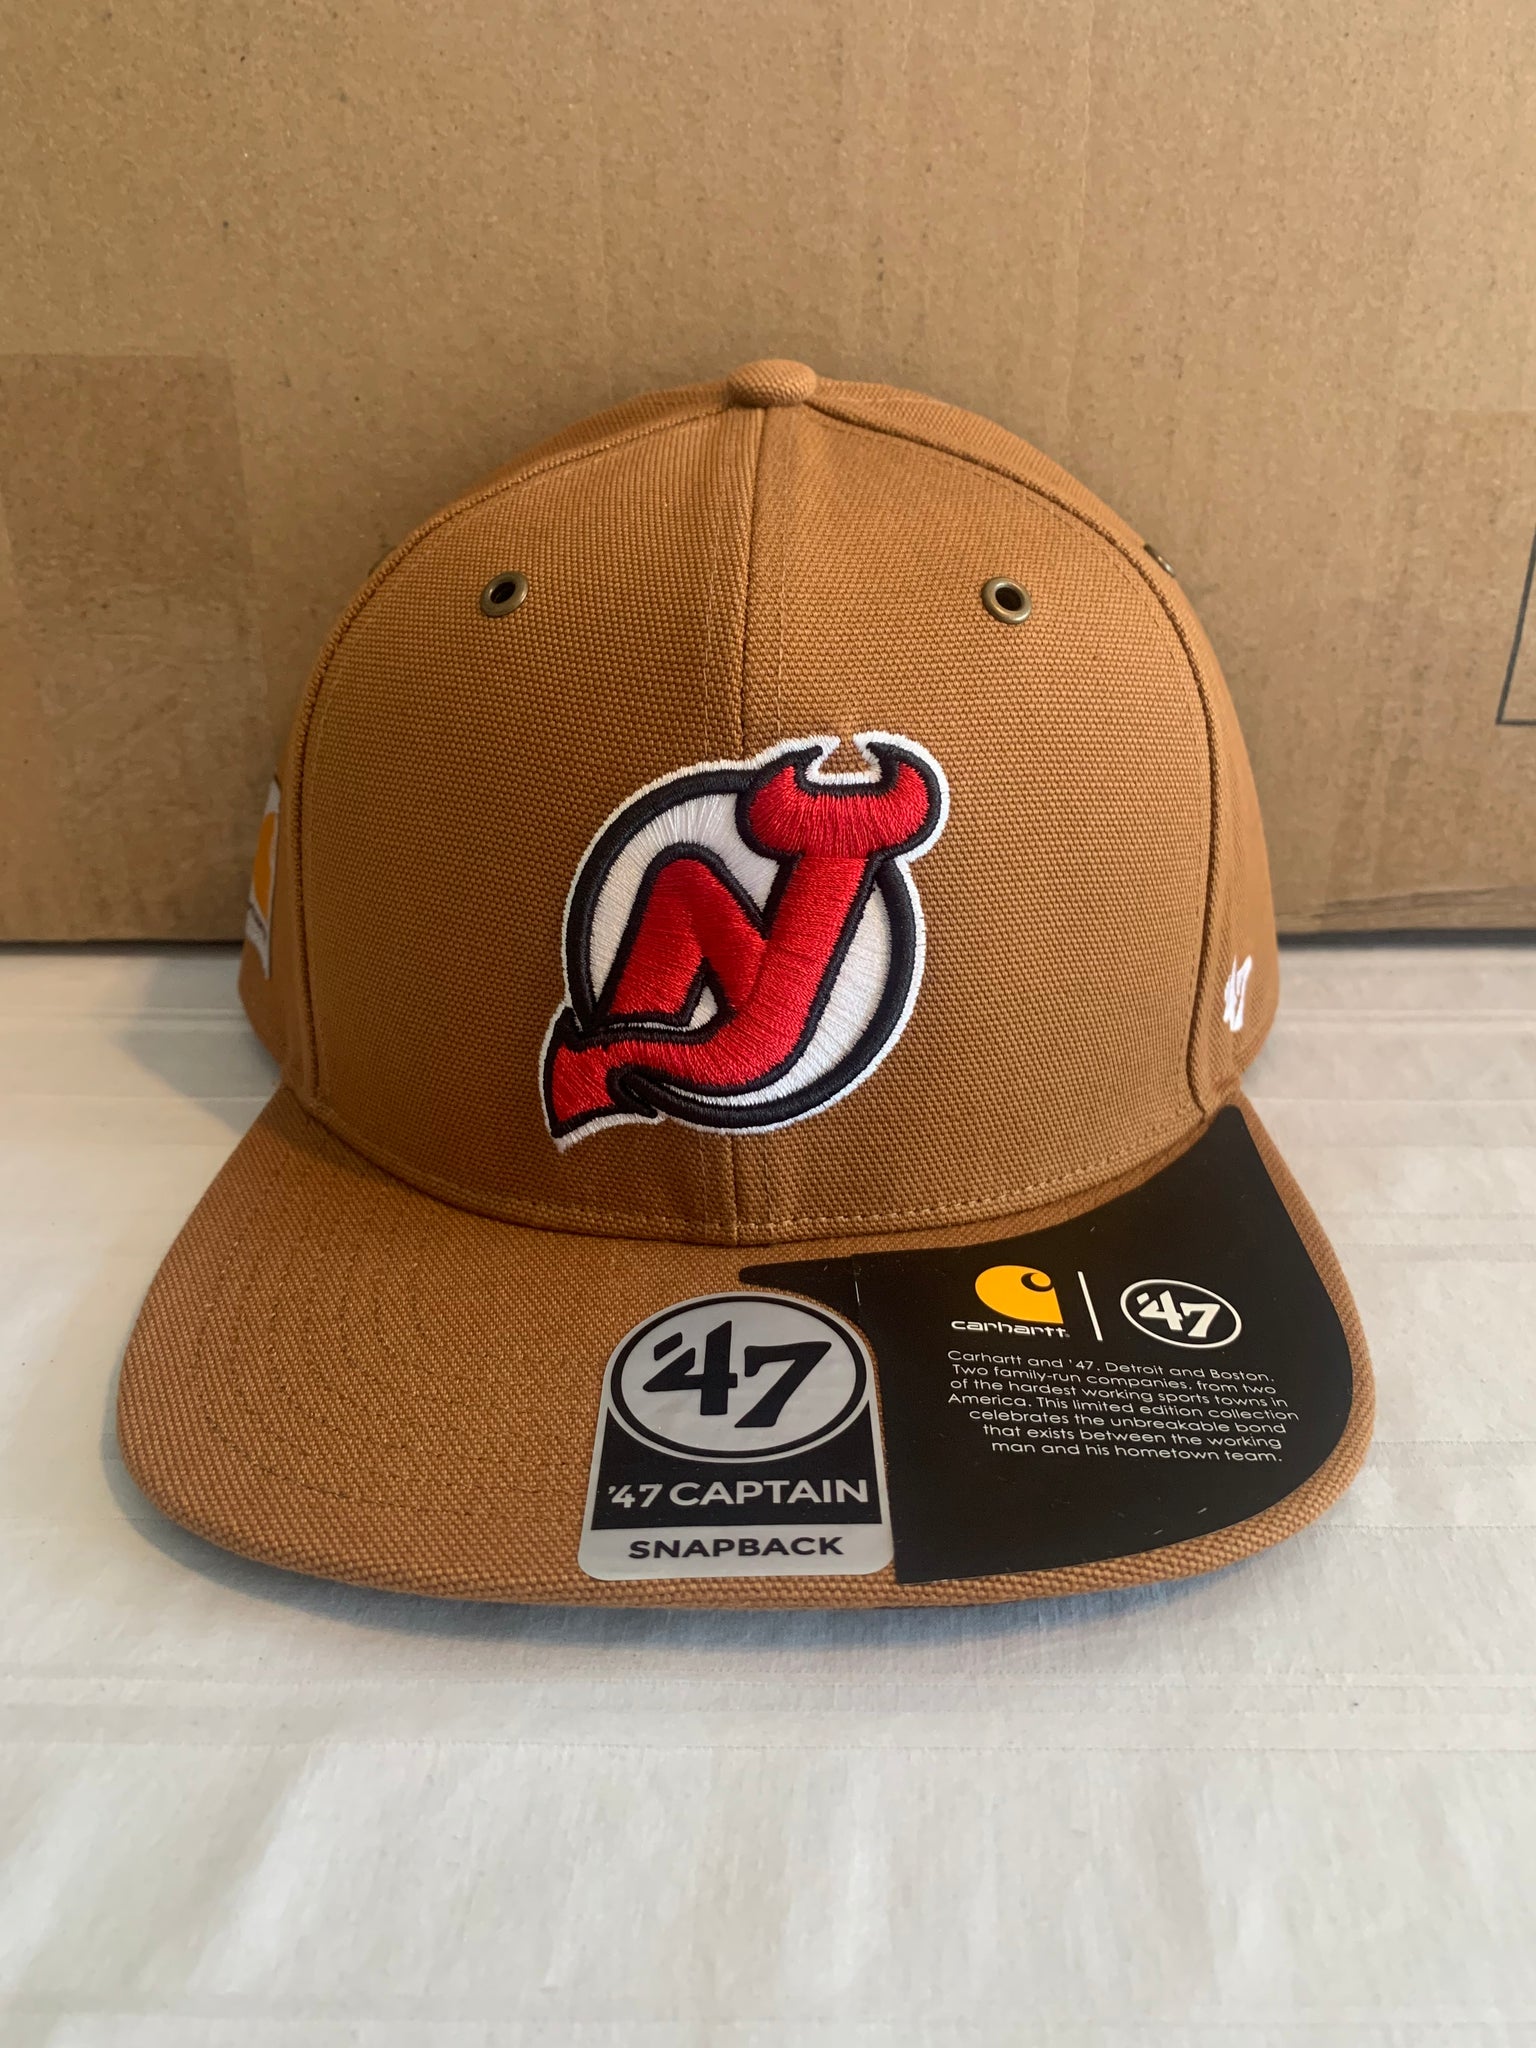 New Jersey Devils Hats, Devils Snapbacks, New Jersey Devils Hats